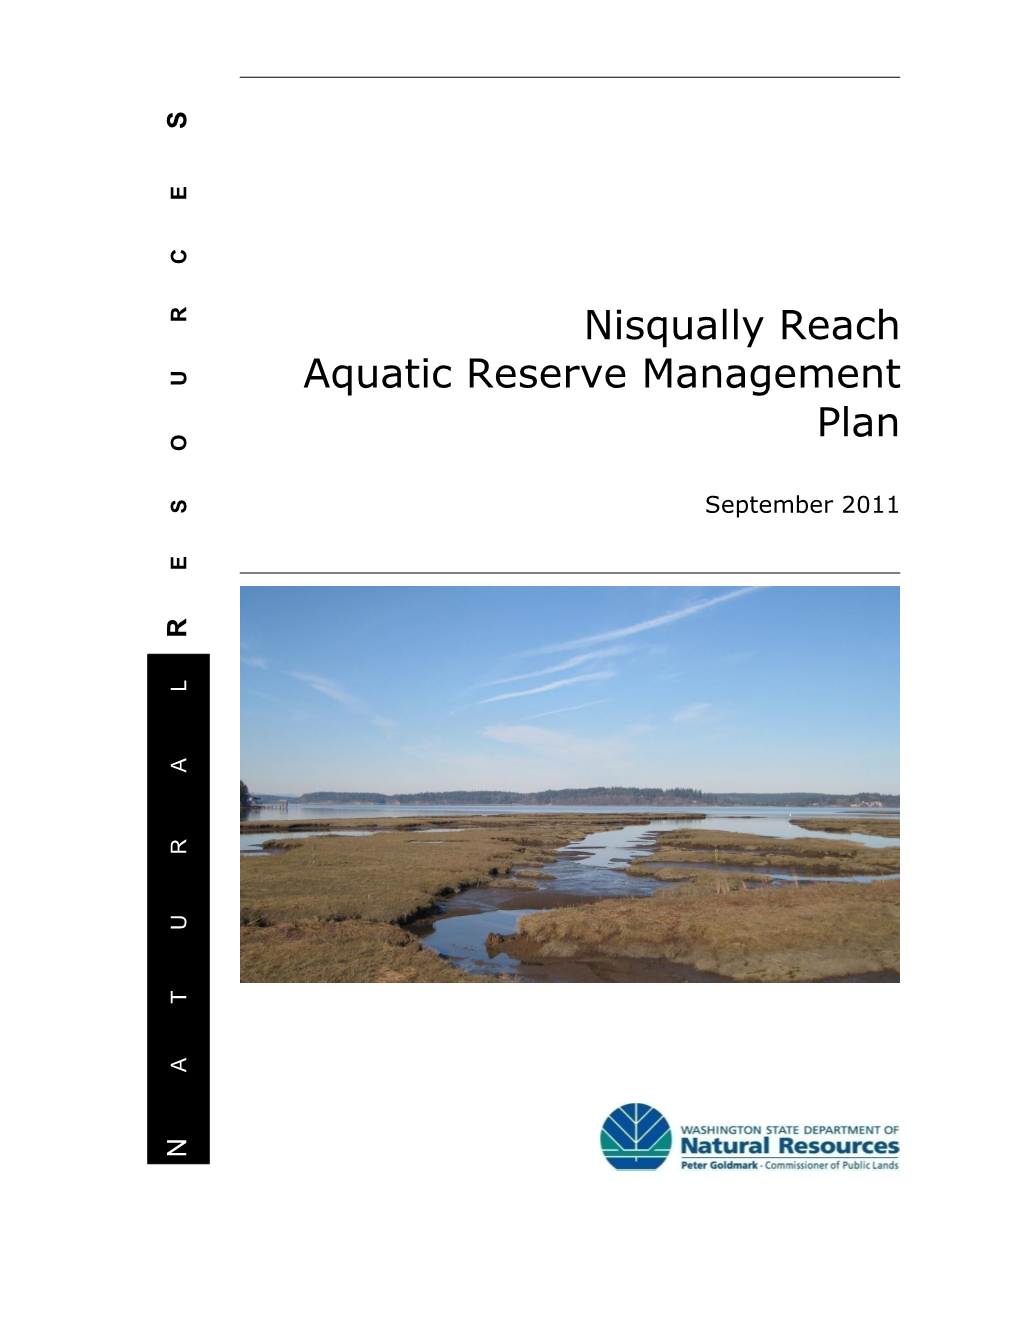 Nisqually Reach Aquatic Reserve Management Plan